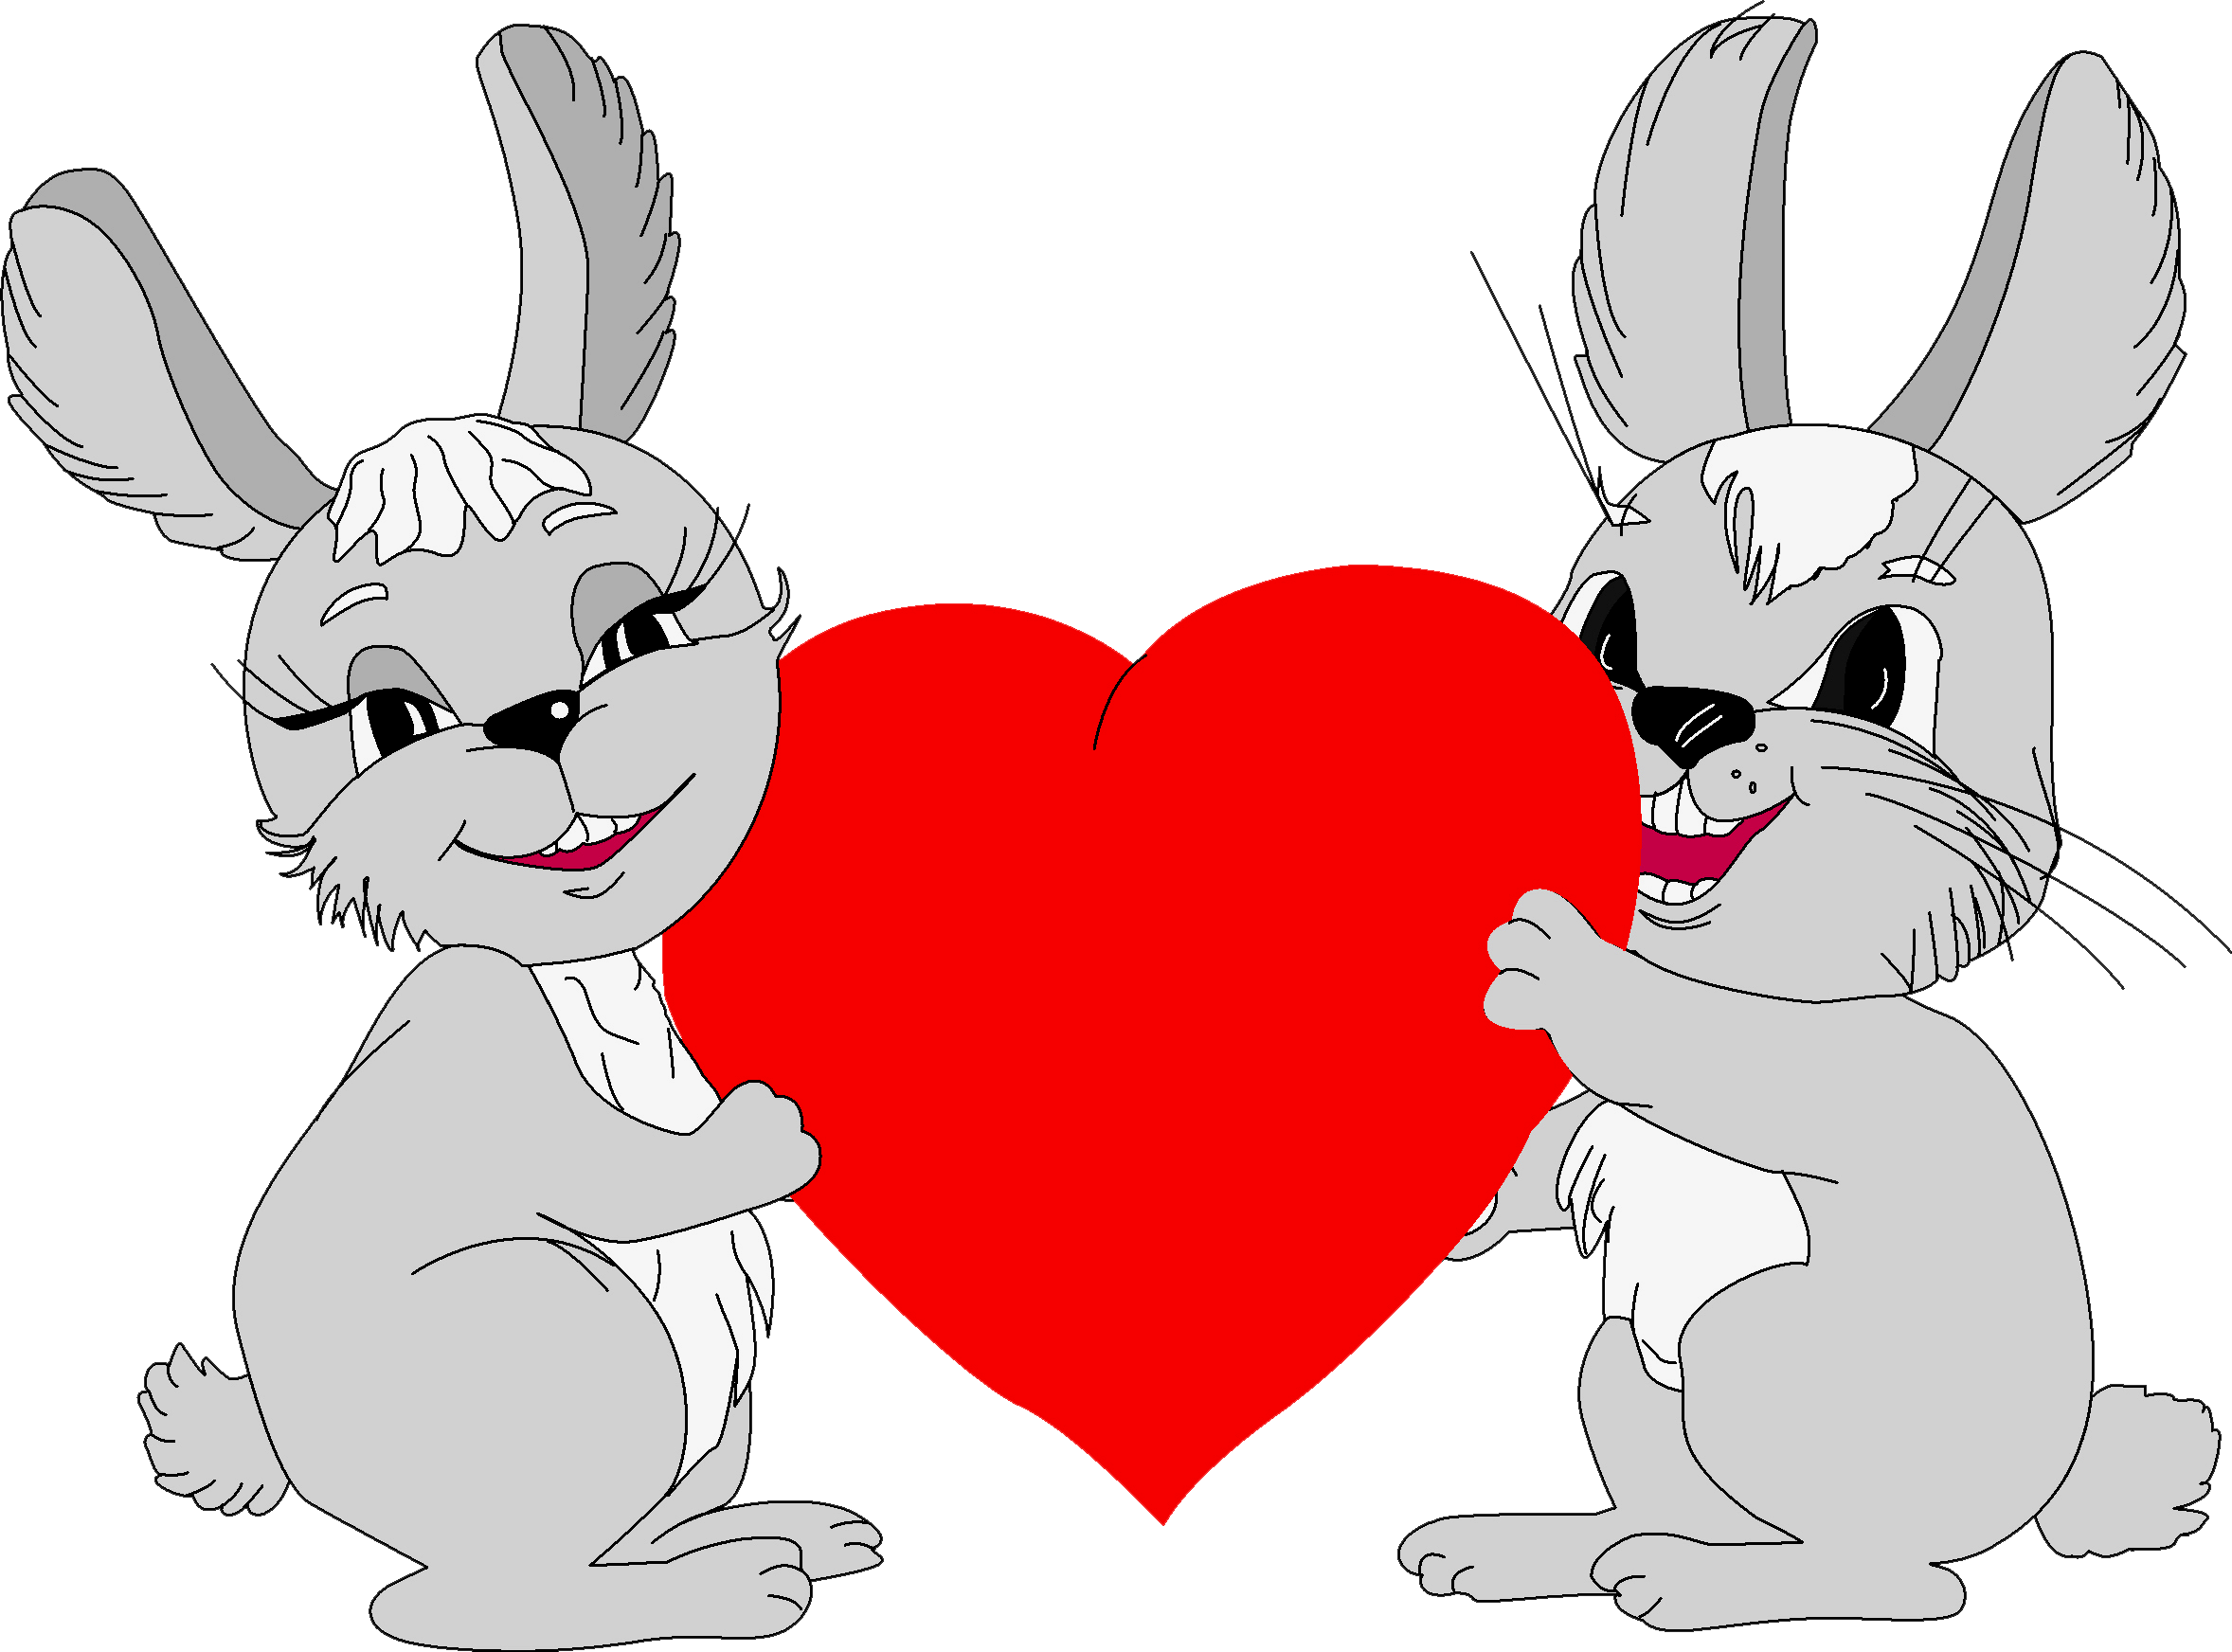 Зайчик обнимает зайчика. Зайчик с сердечком. Заяц с сердцем. Зайка с сердечком. Кролик с сердечком.